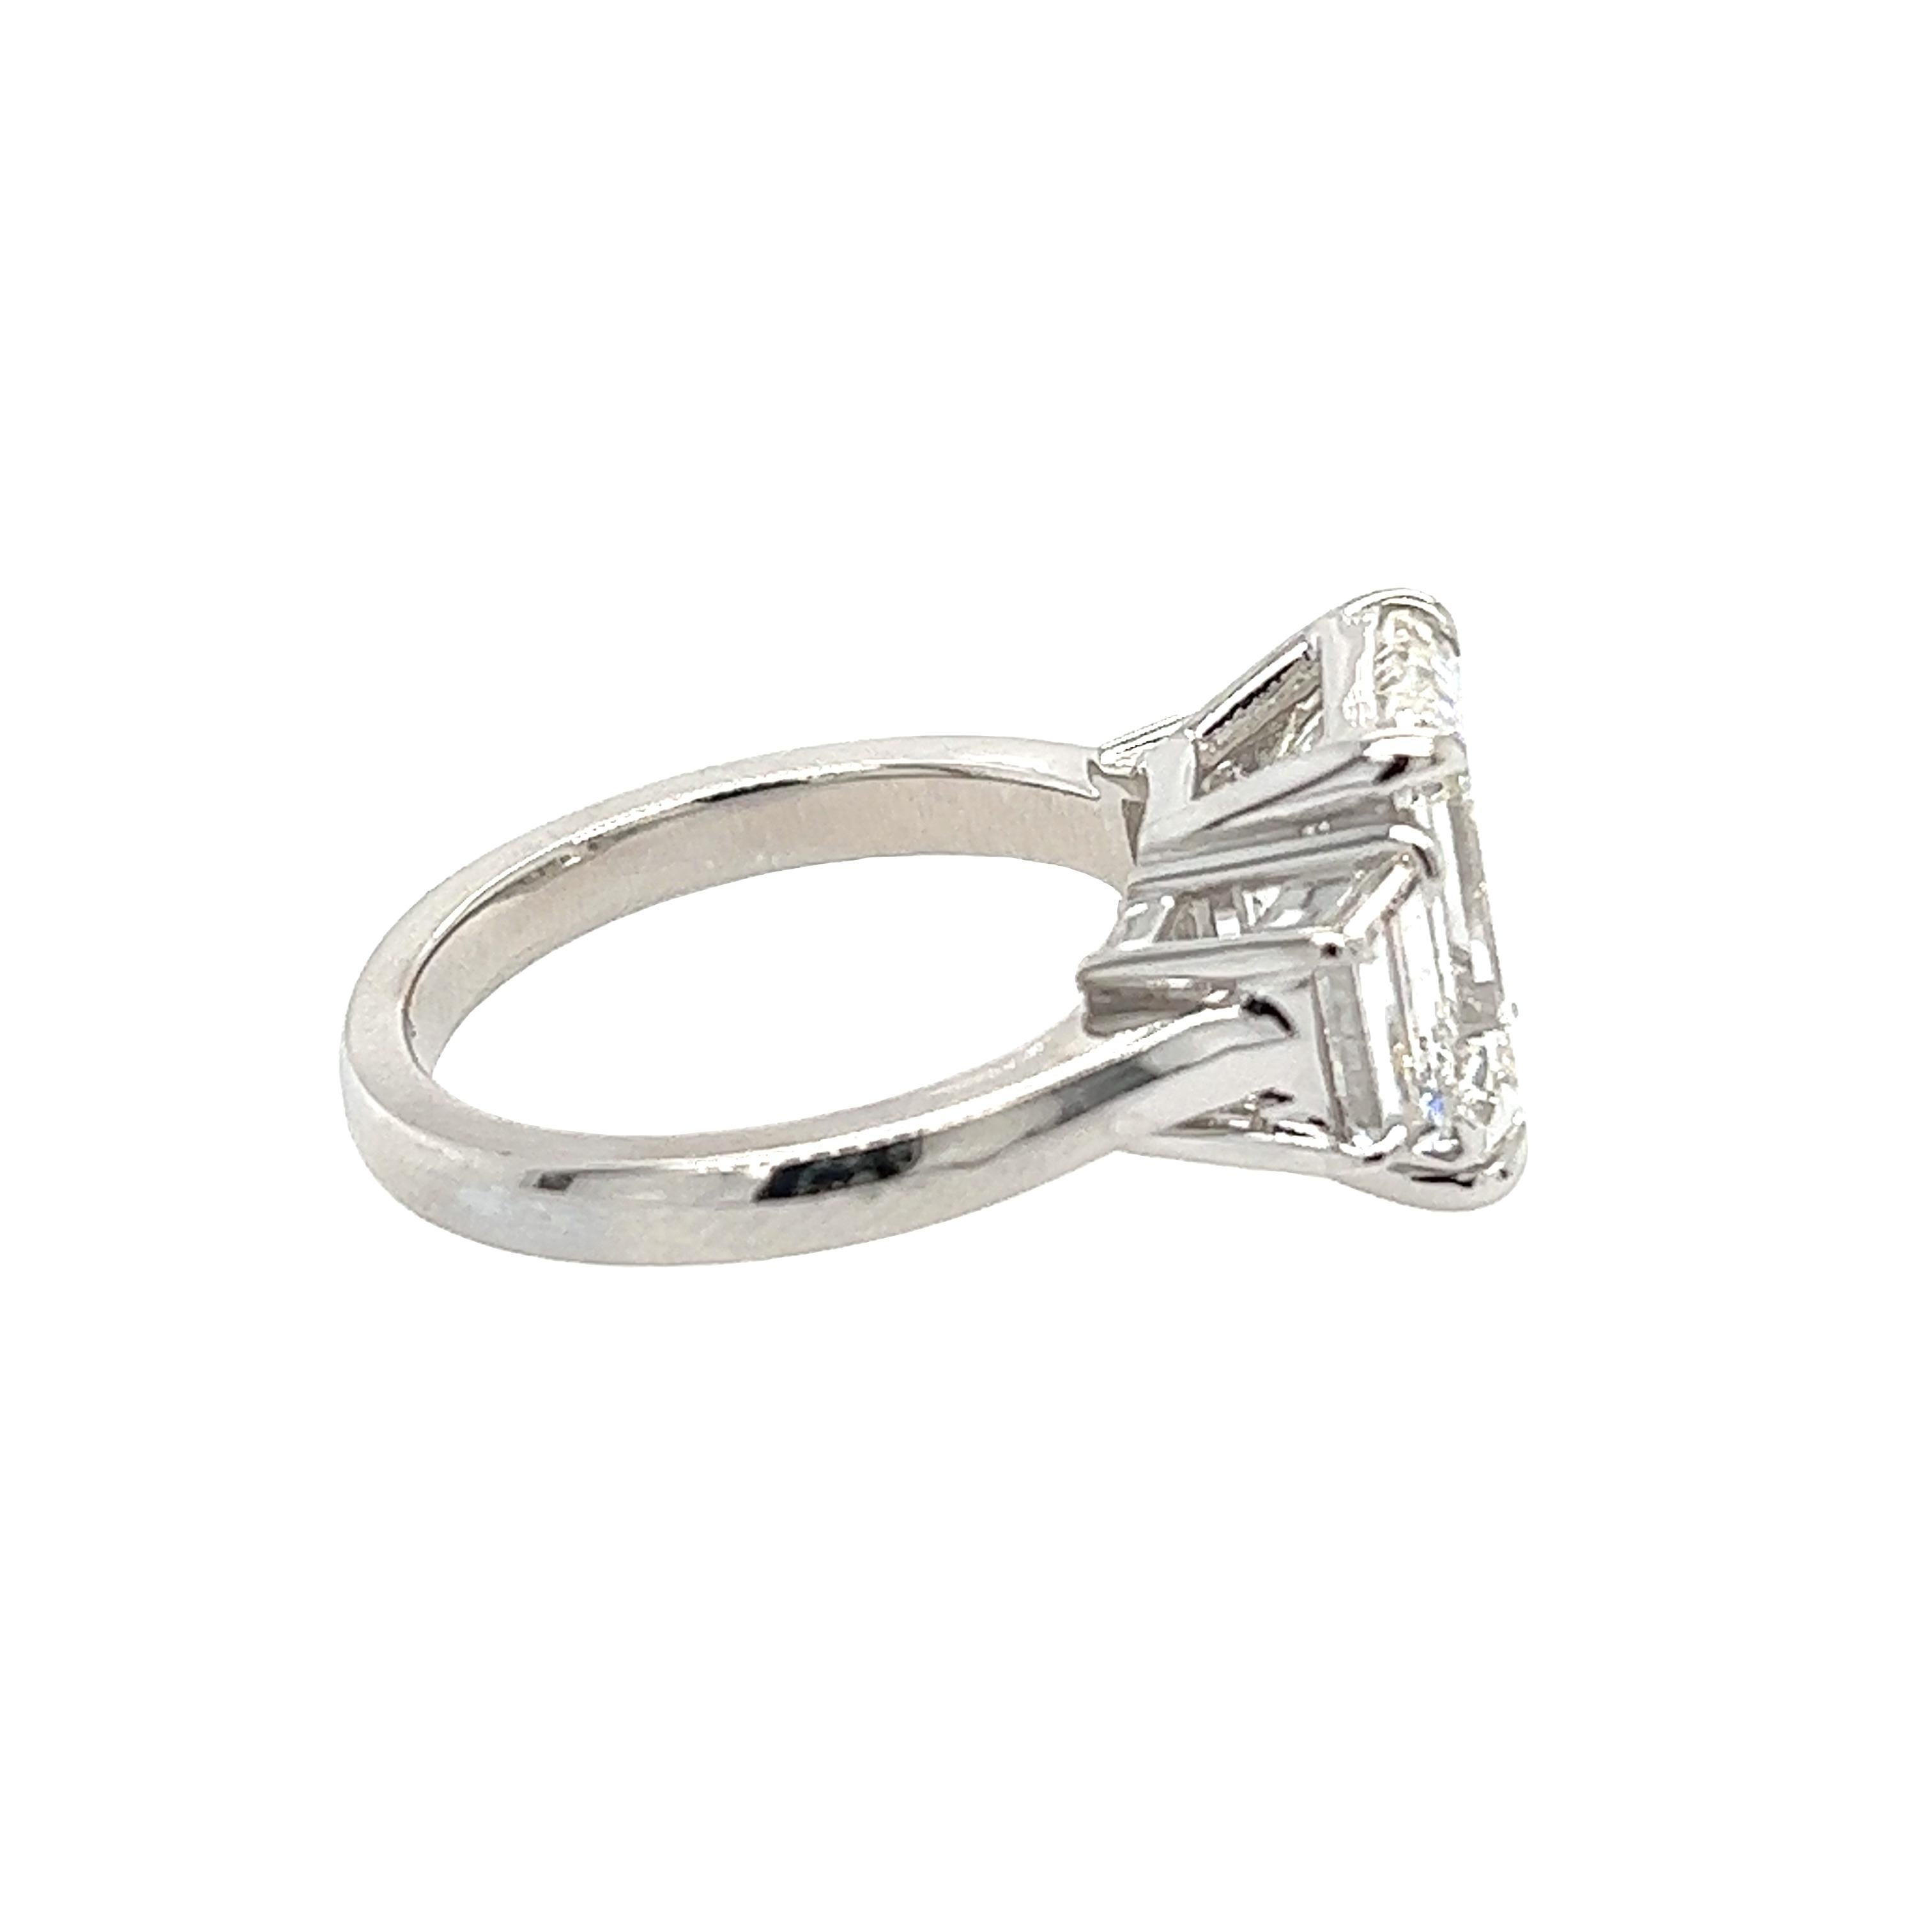 David Rosenberg 5.01 Carat Emerald Cut G VS1 GIA Diamond Engagement Ring In New Condition For Sale In Boca Raton, FL